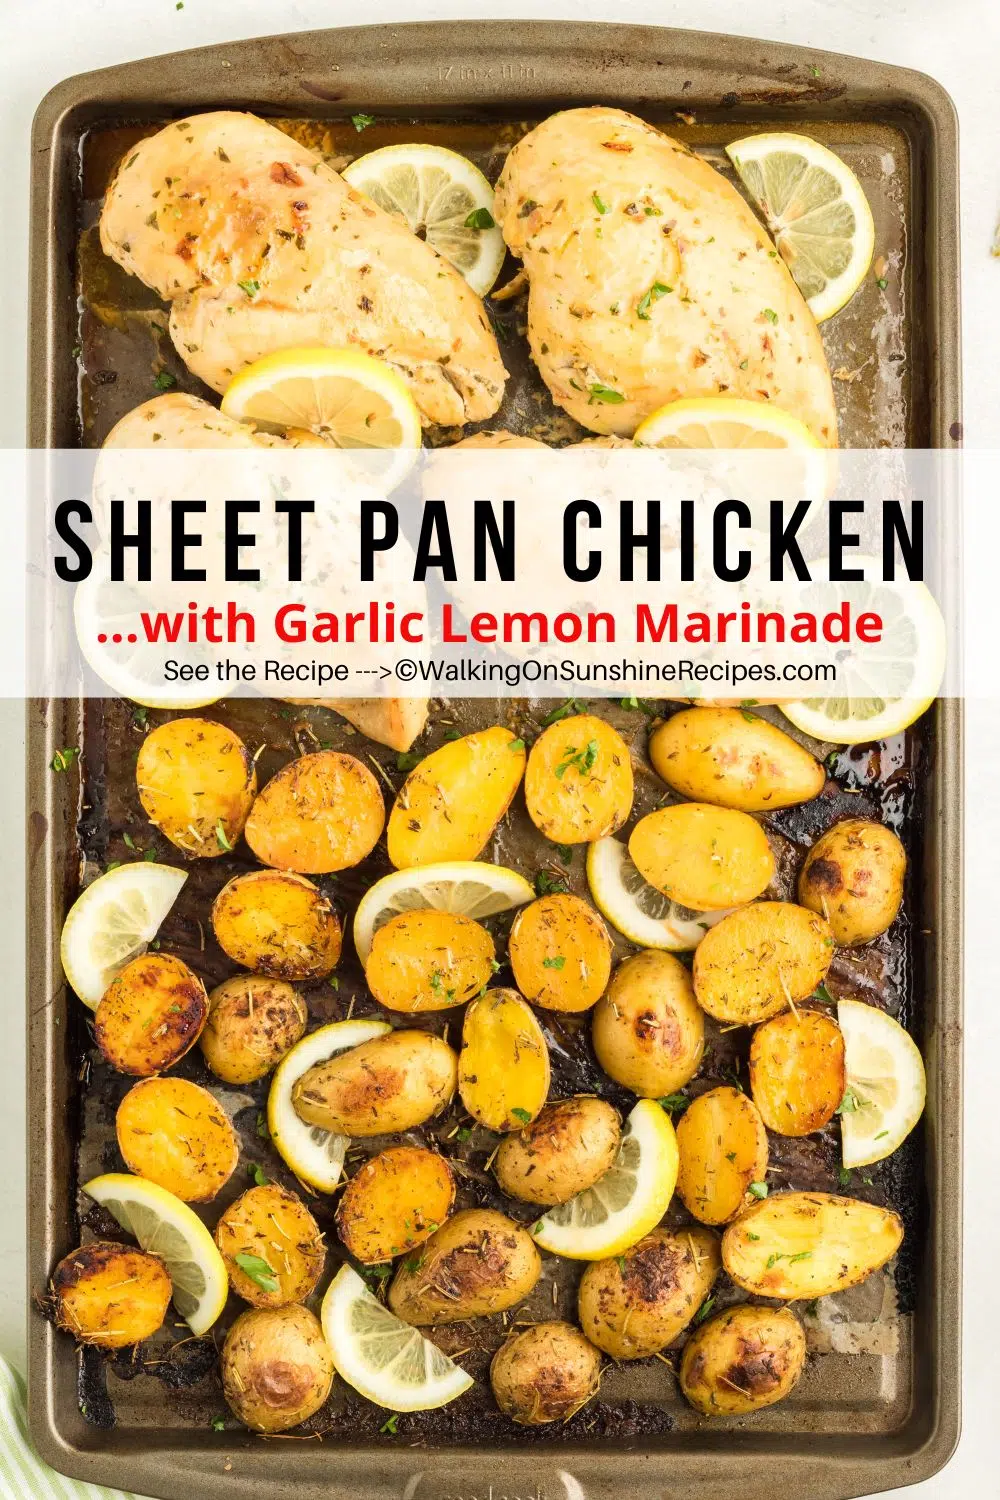 Sheet pan chicken with potatoes.